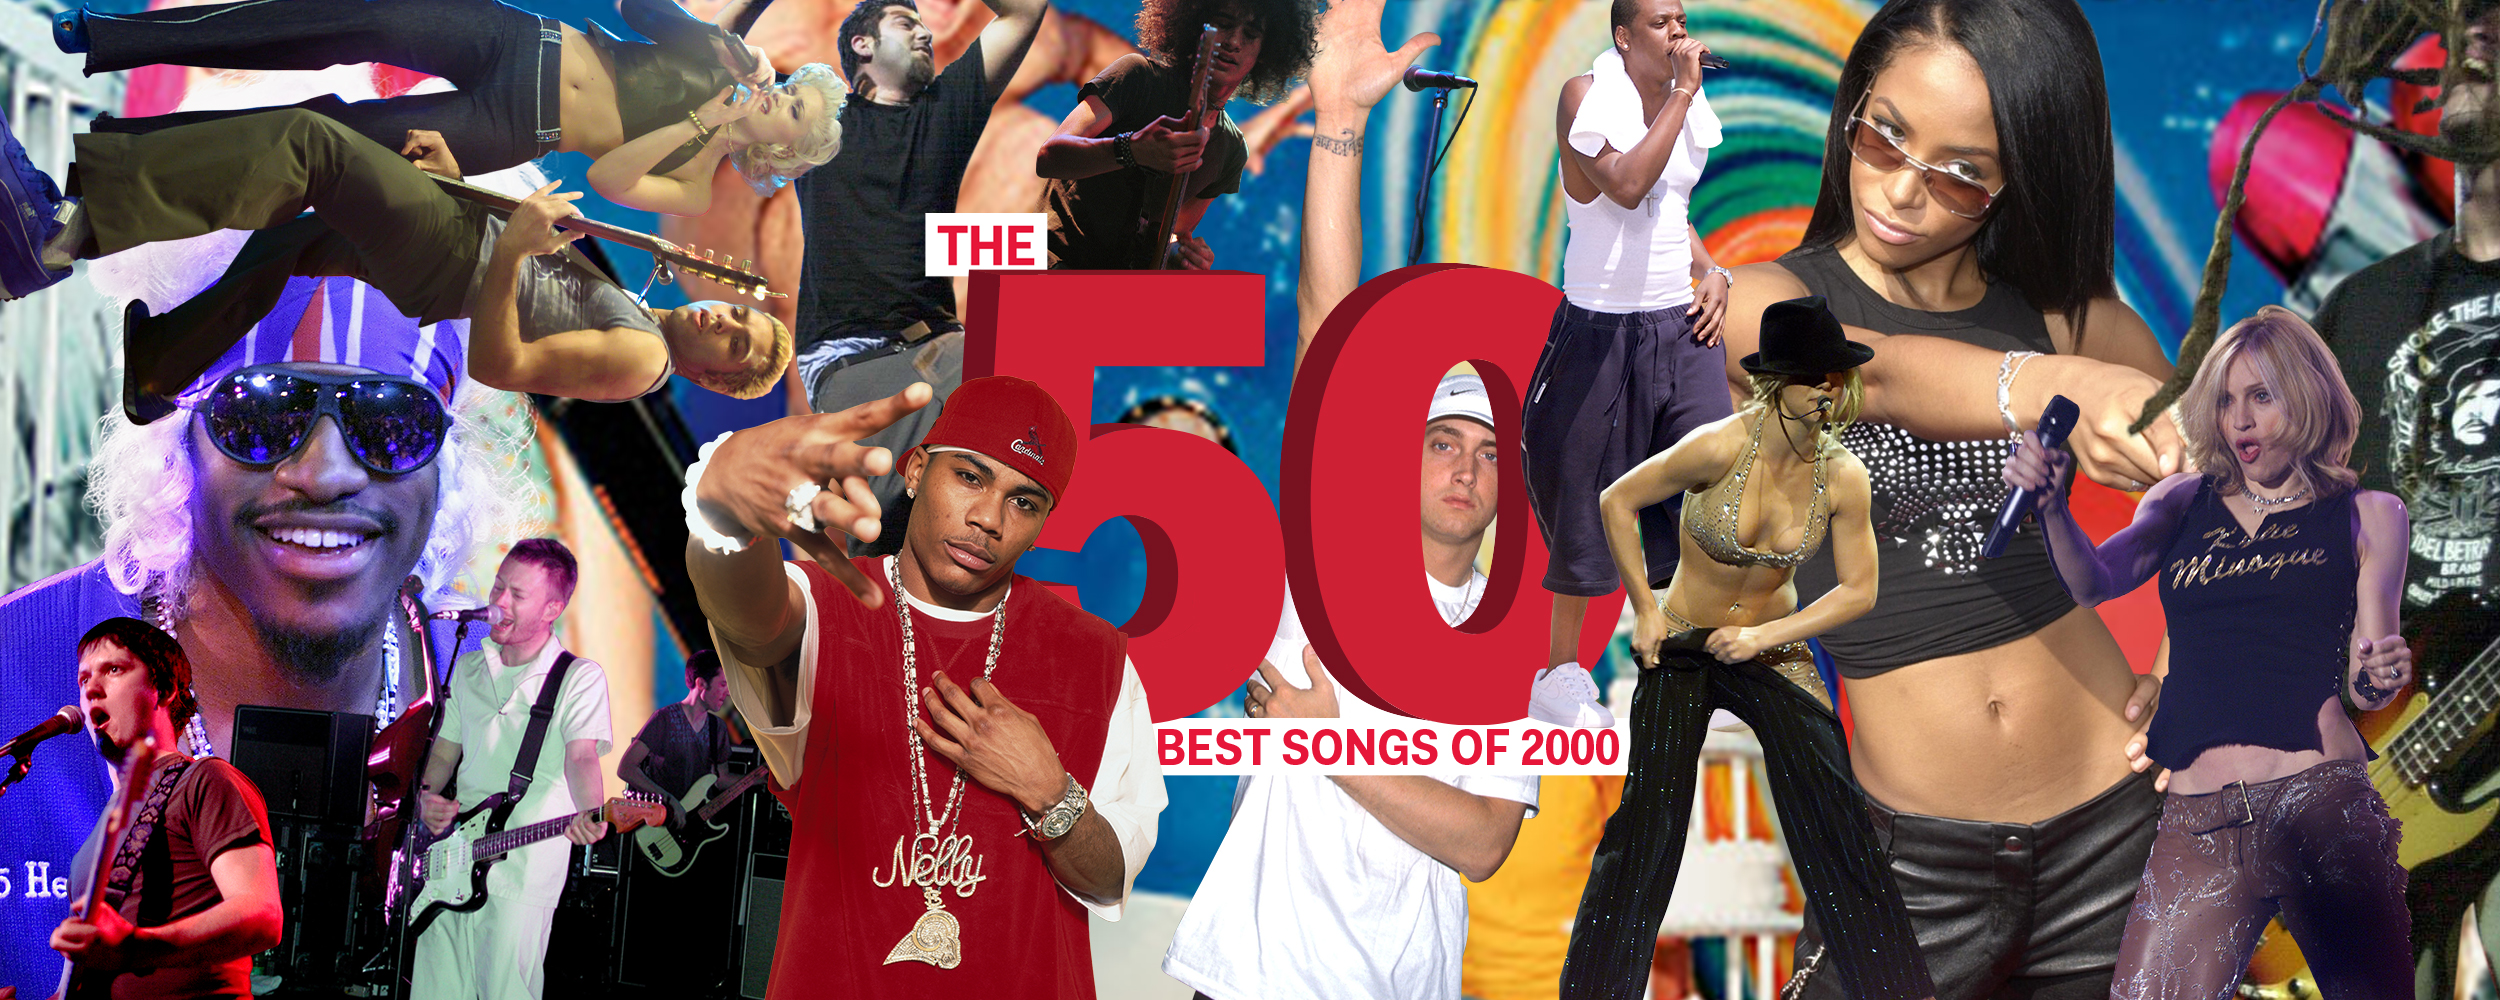 Bestaan atomair geschiedenis The 50 Best Songs of the Year 2000